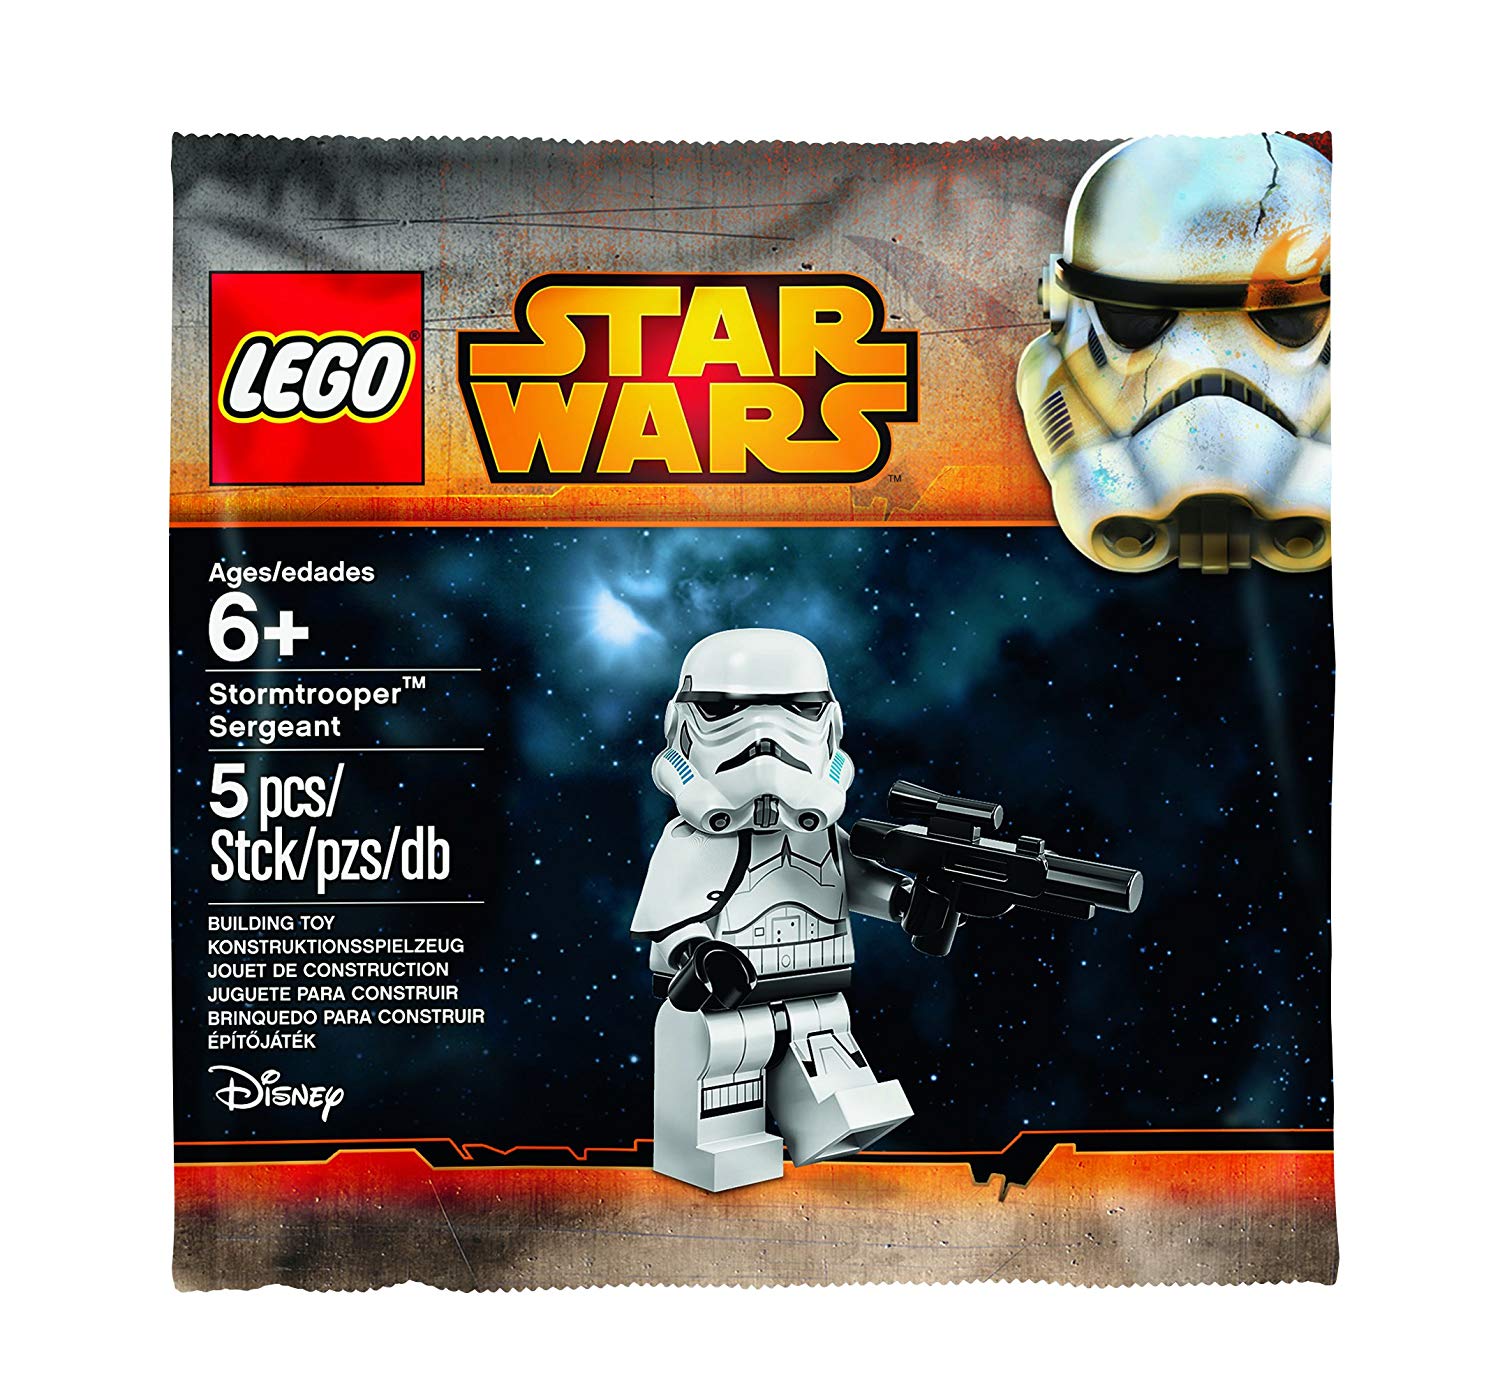 Lego Star Wars Stormtrooper Sergeant 5002938 (2015) By Lego